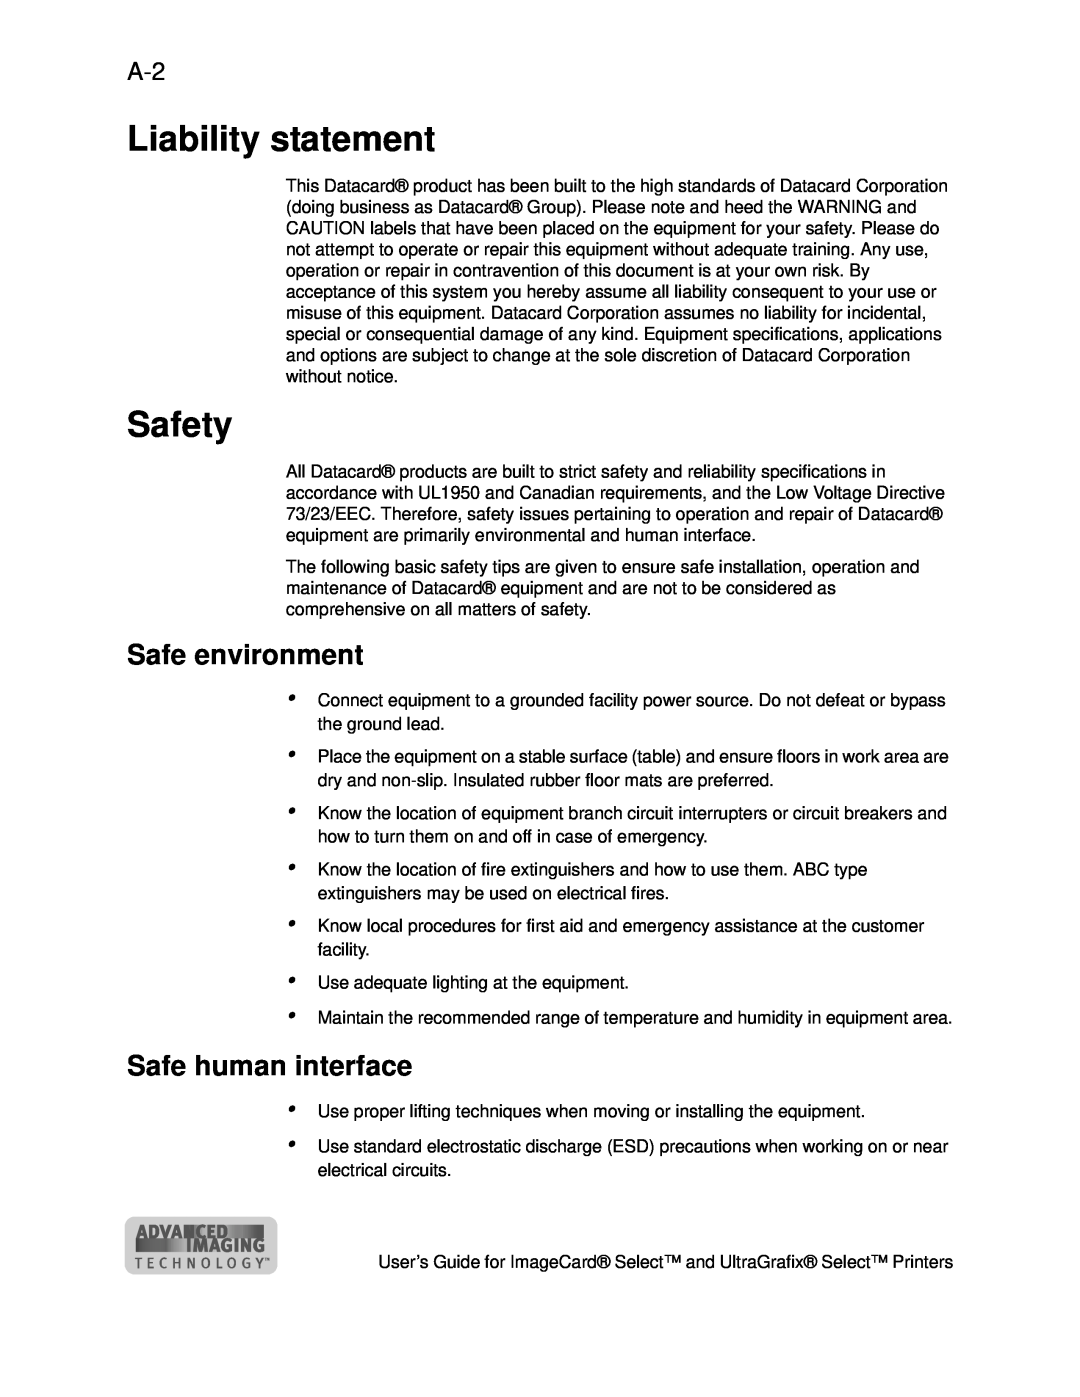 Datacard Group ImageCard SelectTM and UltraGrafix SelectTM Printers manual Liability statement, Safety, Safe environment 